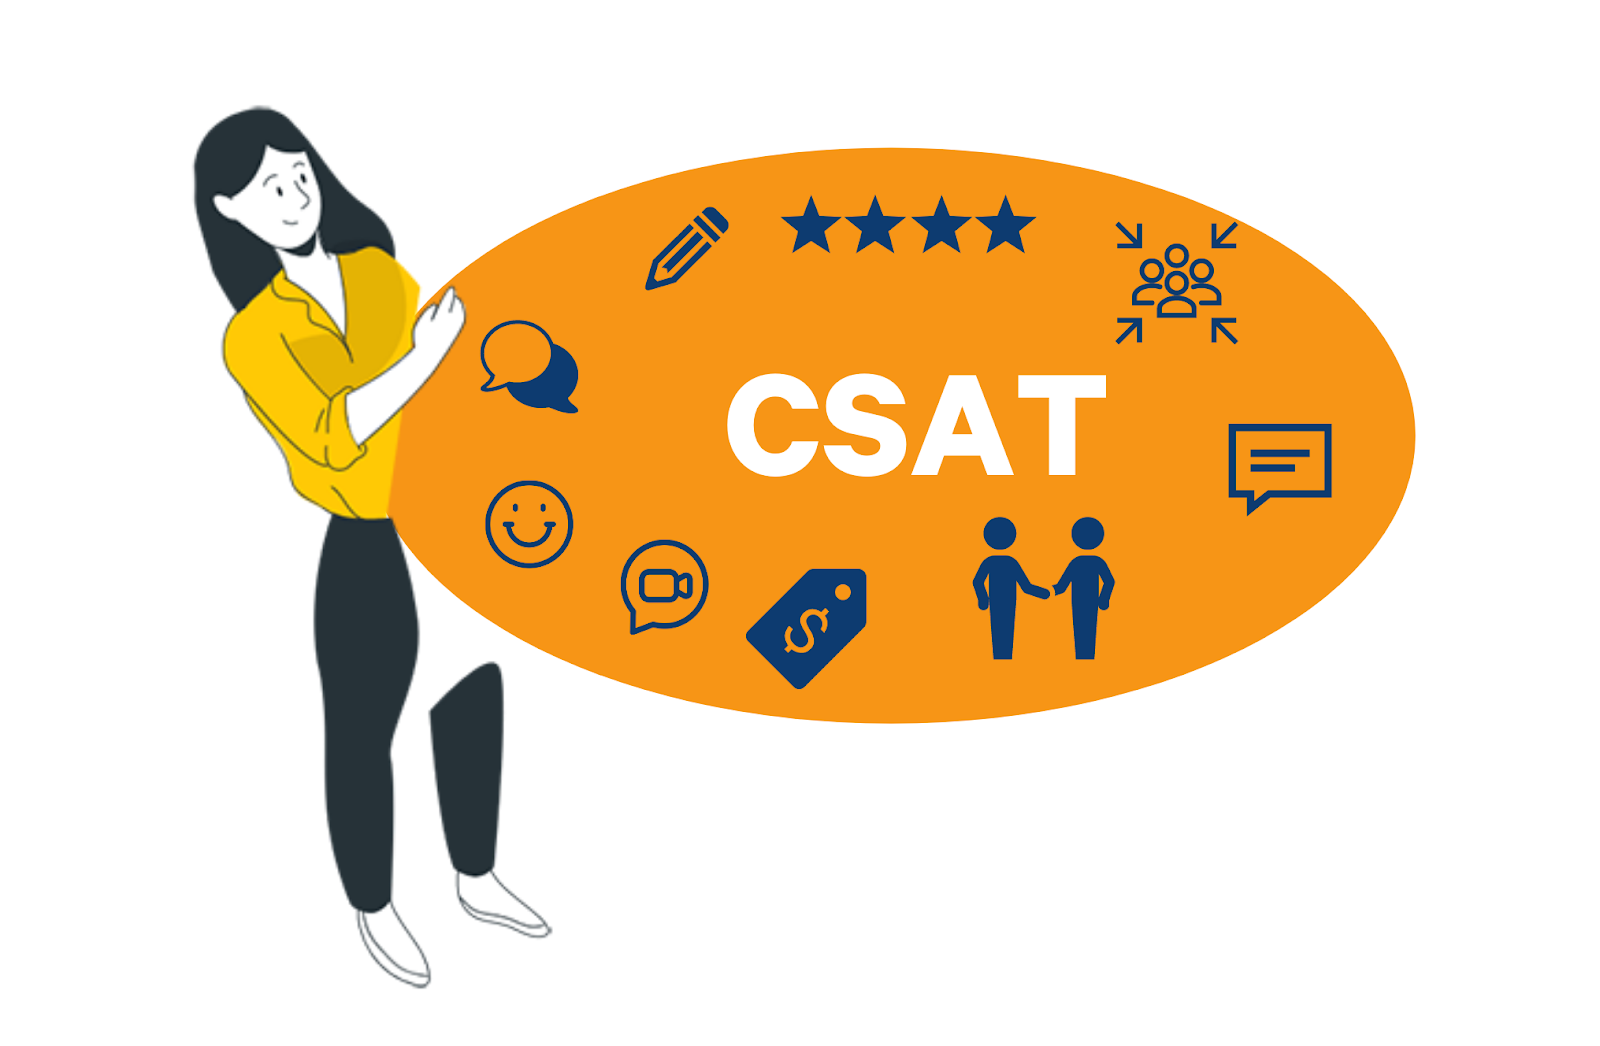 CSAT customer feedback survey question